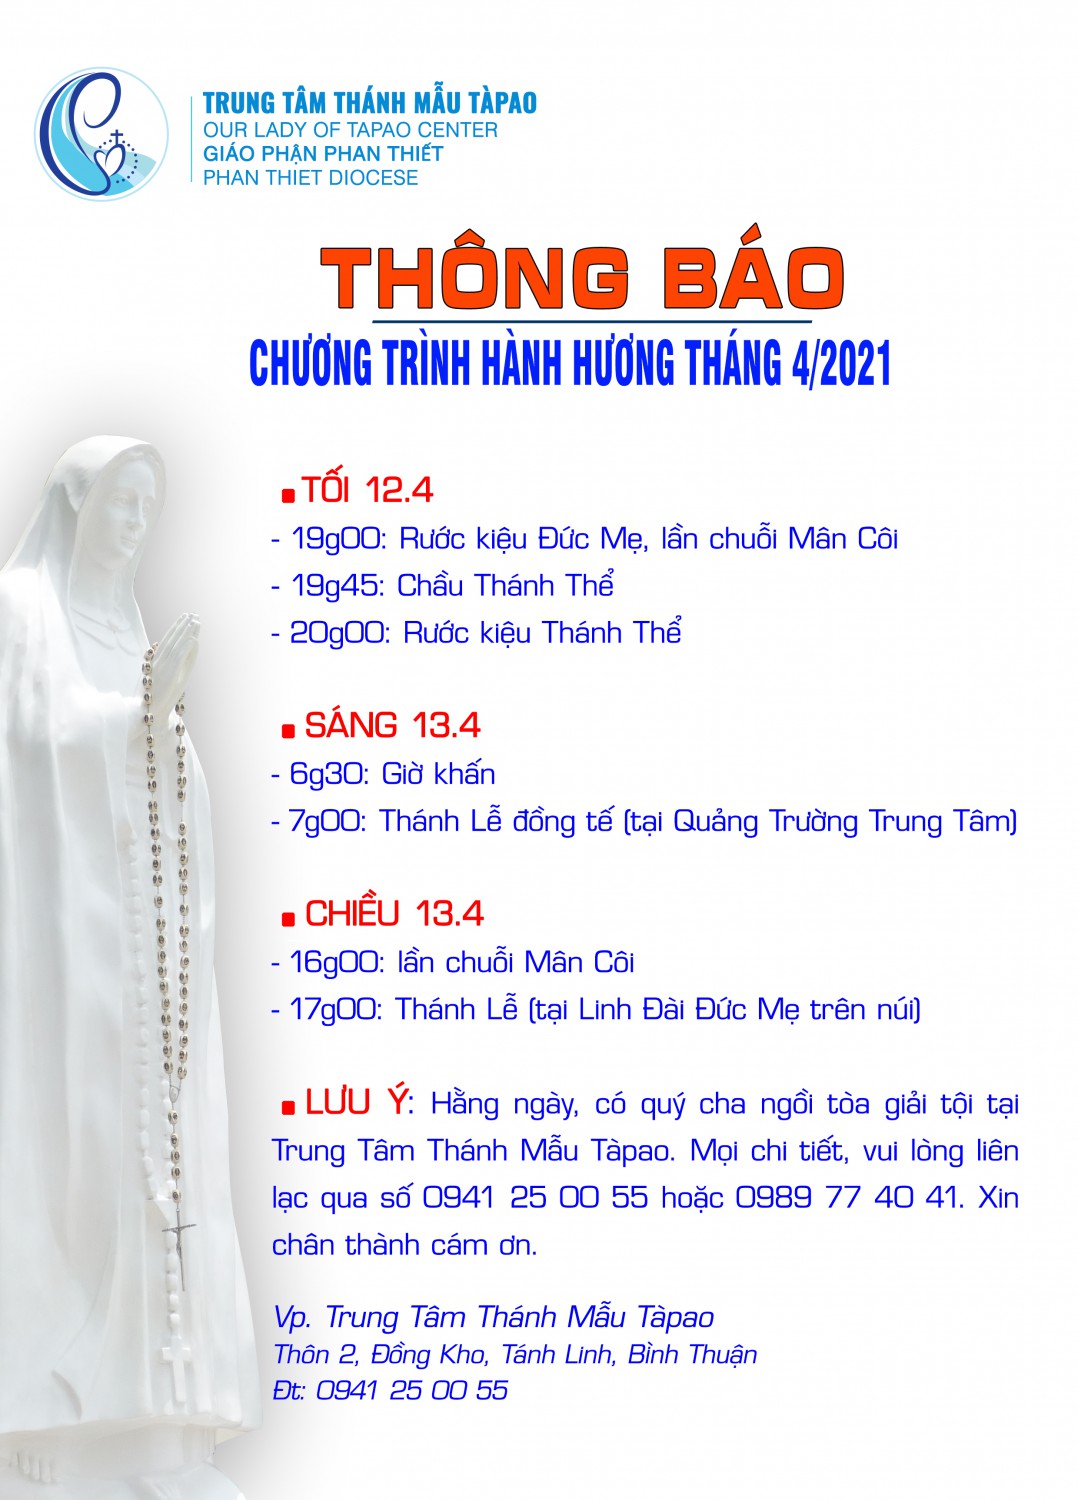 THONG BAO THANG 4 nam 2021